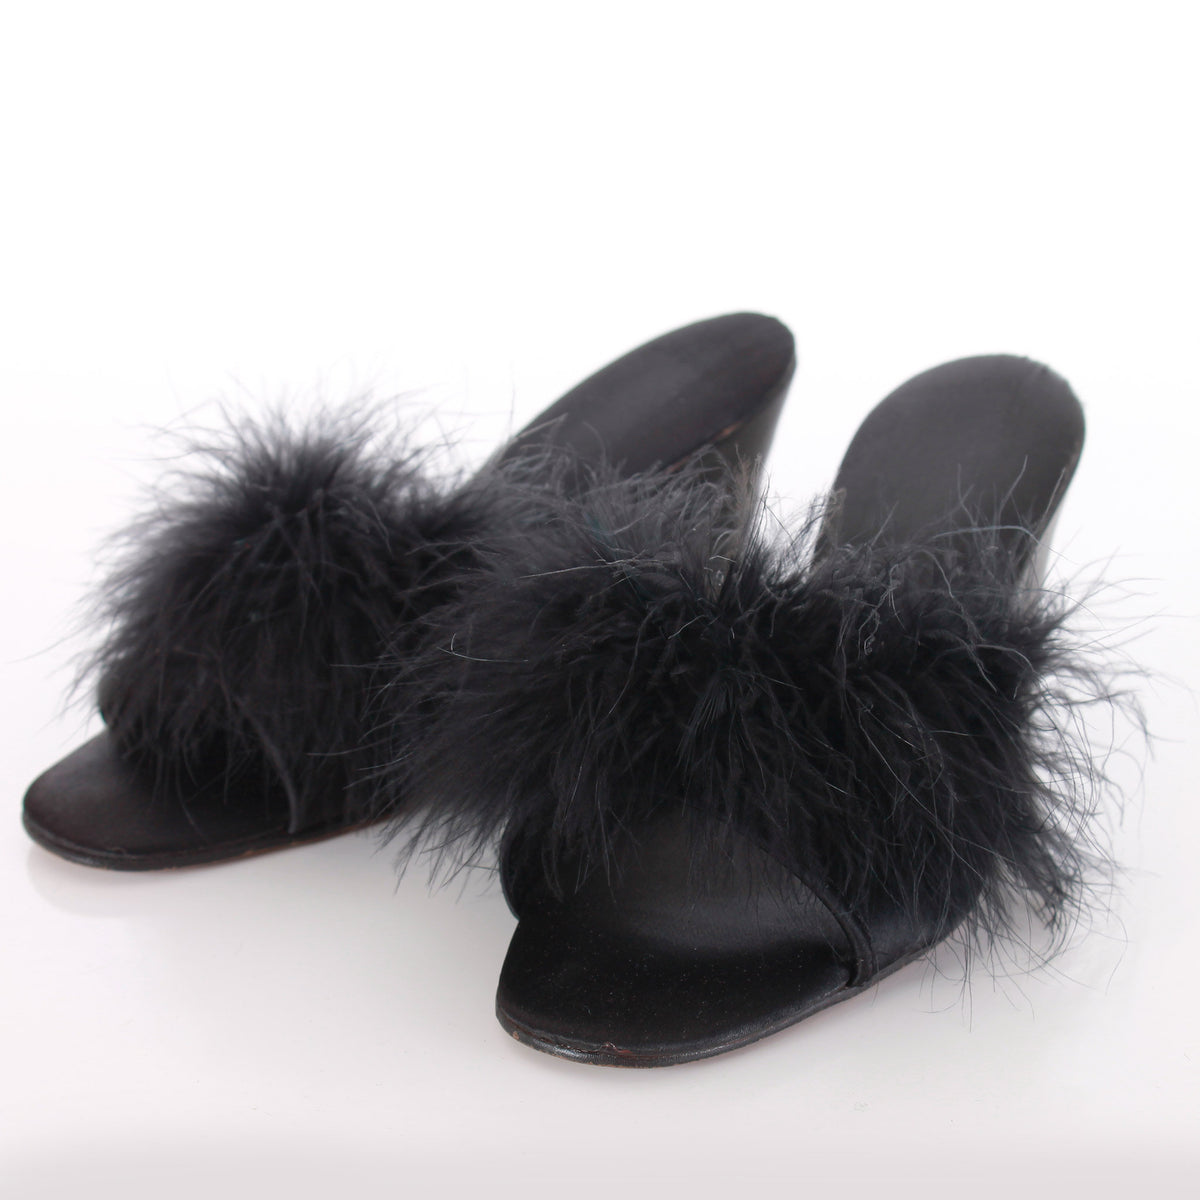 Marabou Feather Black Satin Bedroom Slippers Wedge Heel Size 7 7.5 USA ...